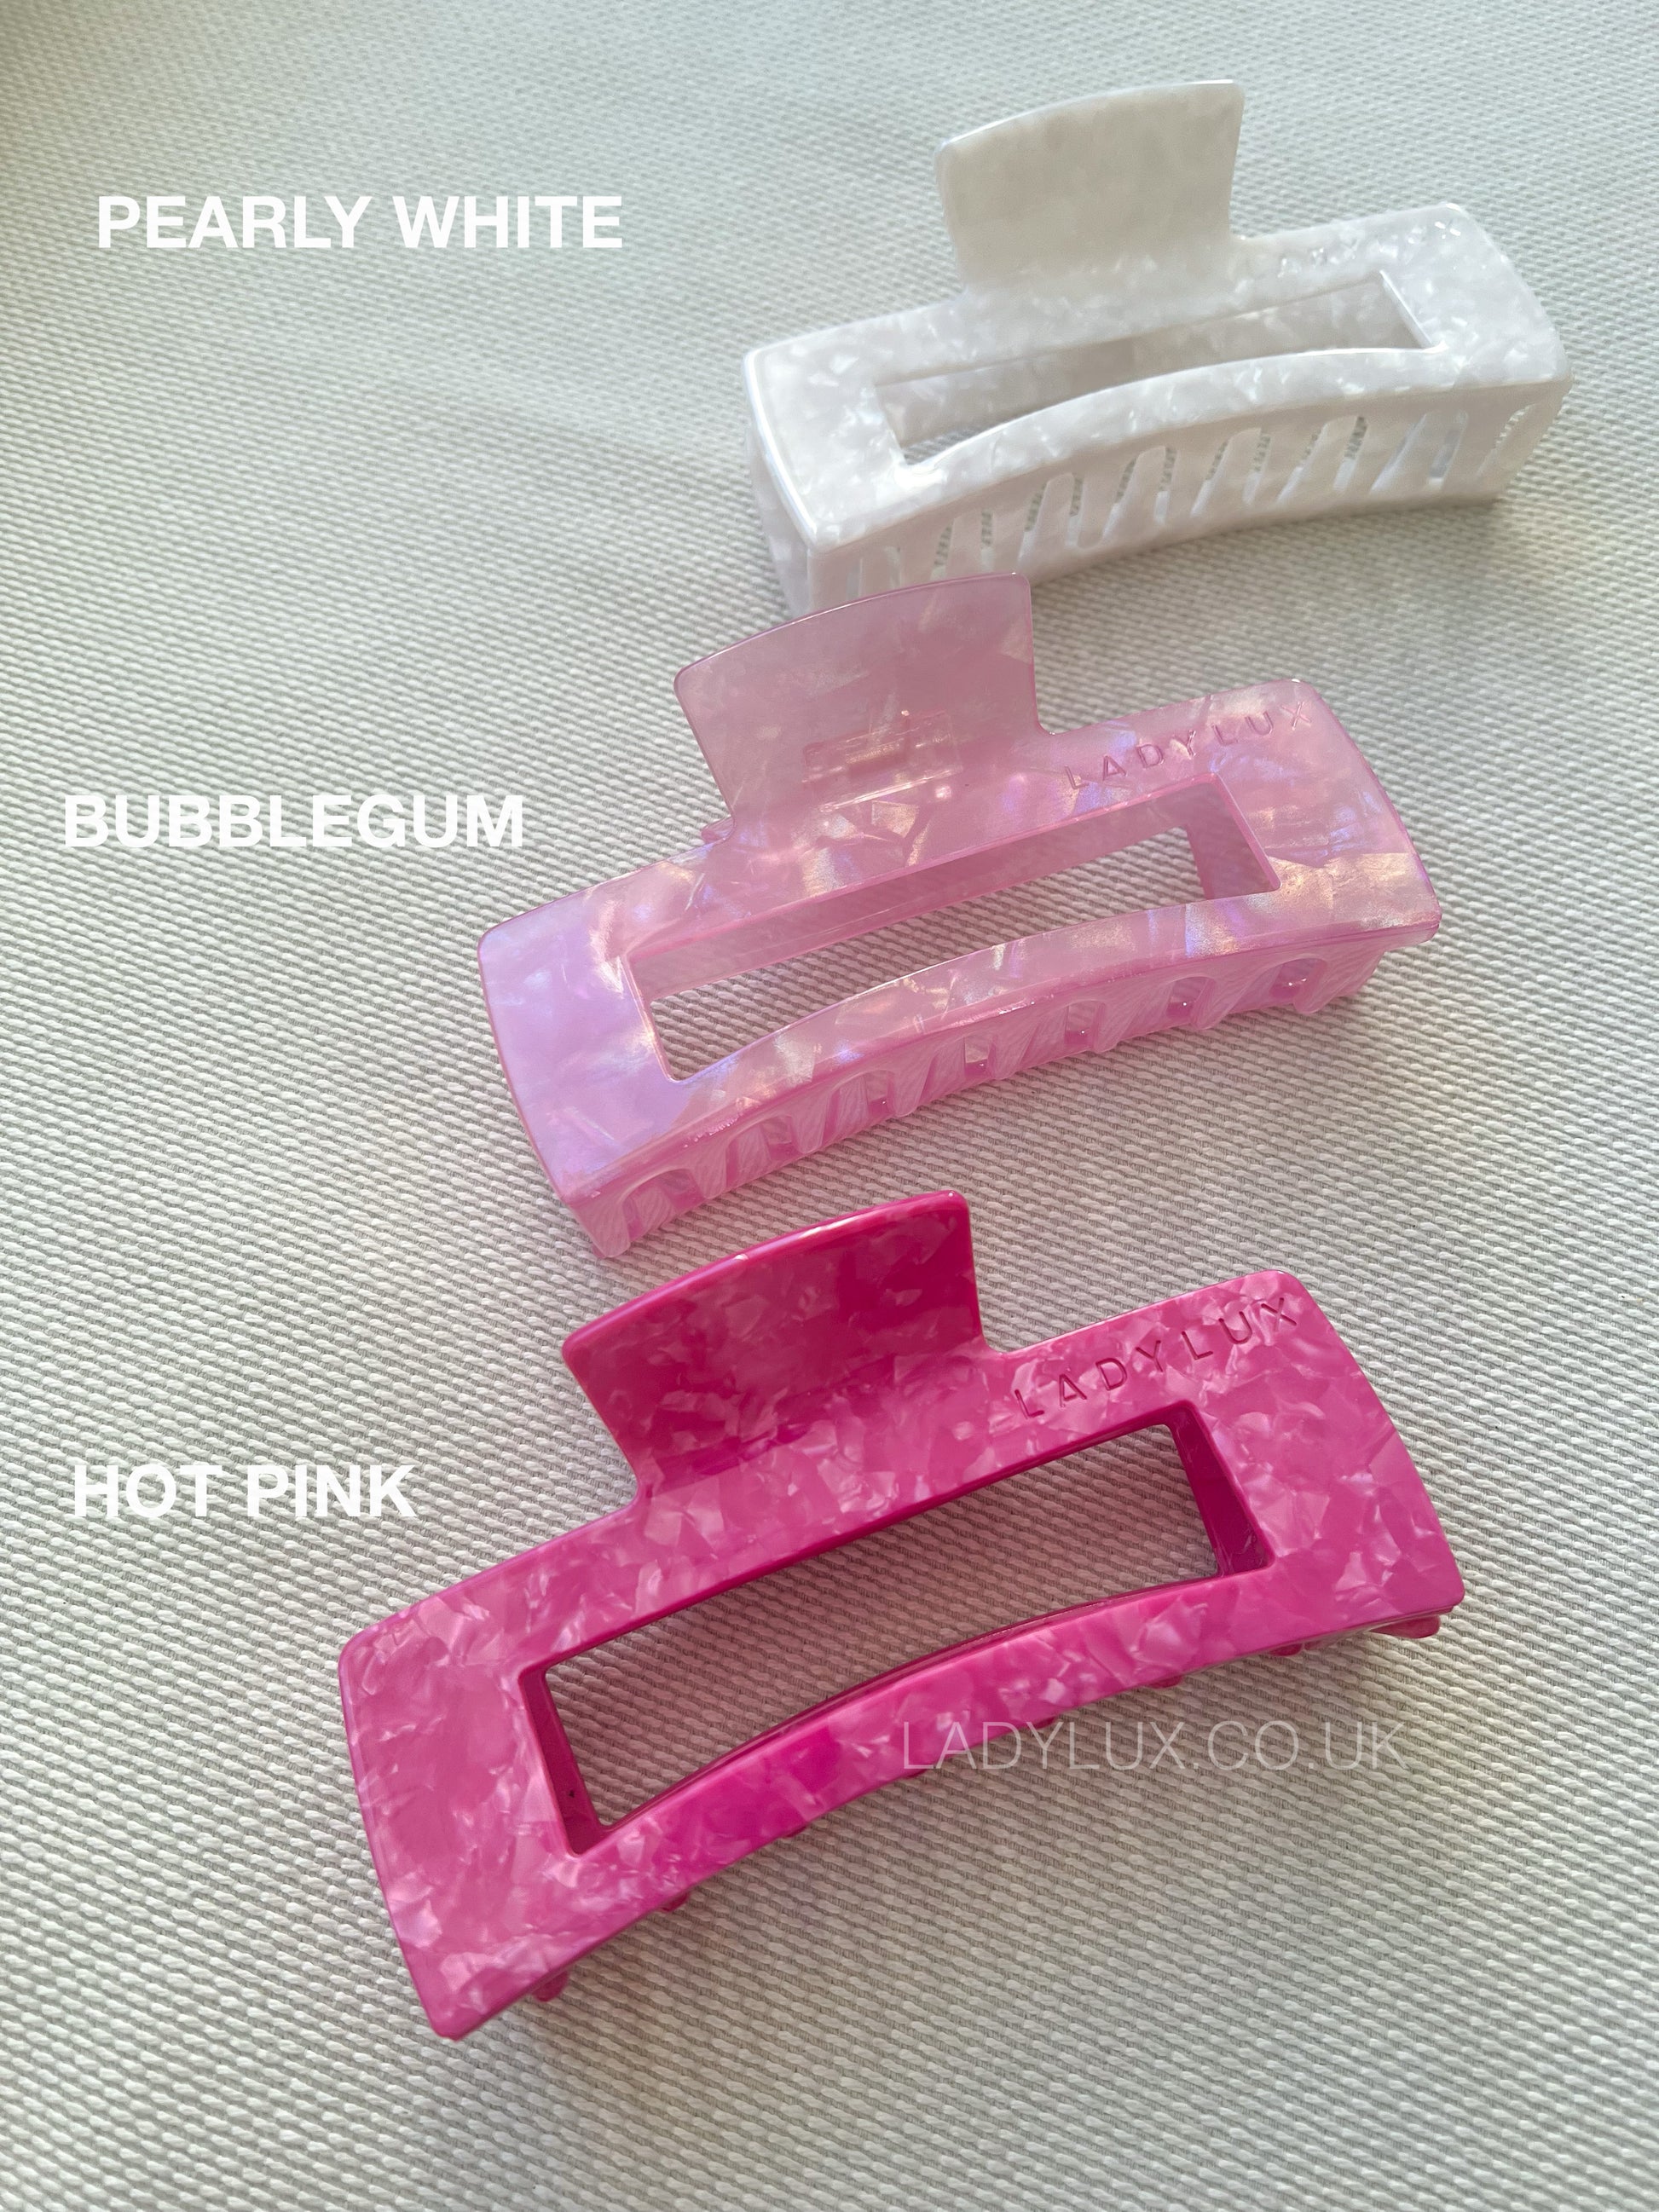 XXL Jumbo Claw Clip - Shade Bubble Gum - Ladylux